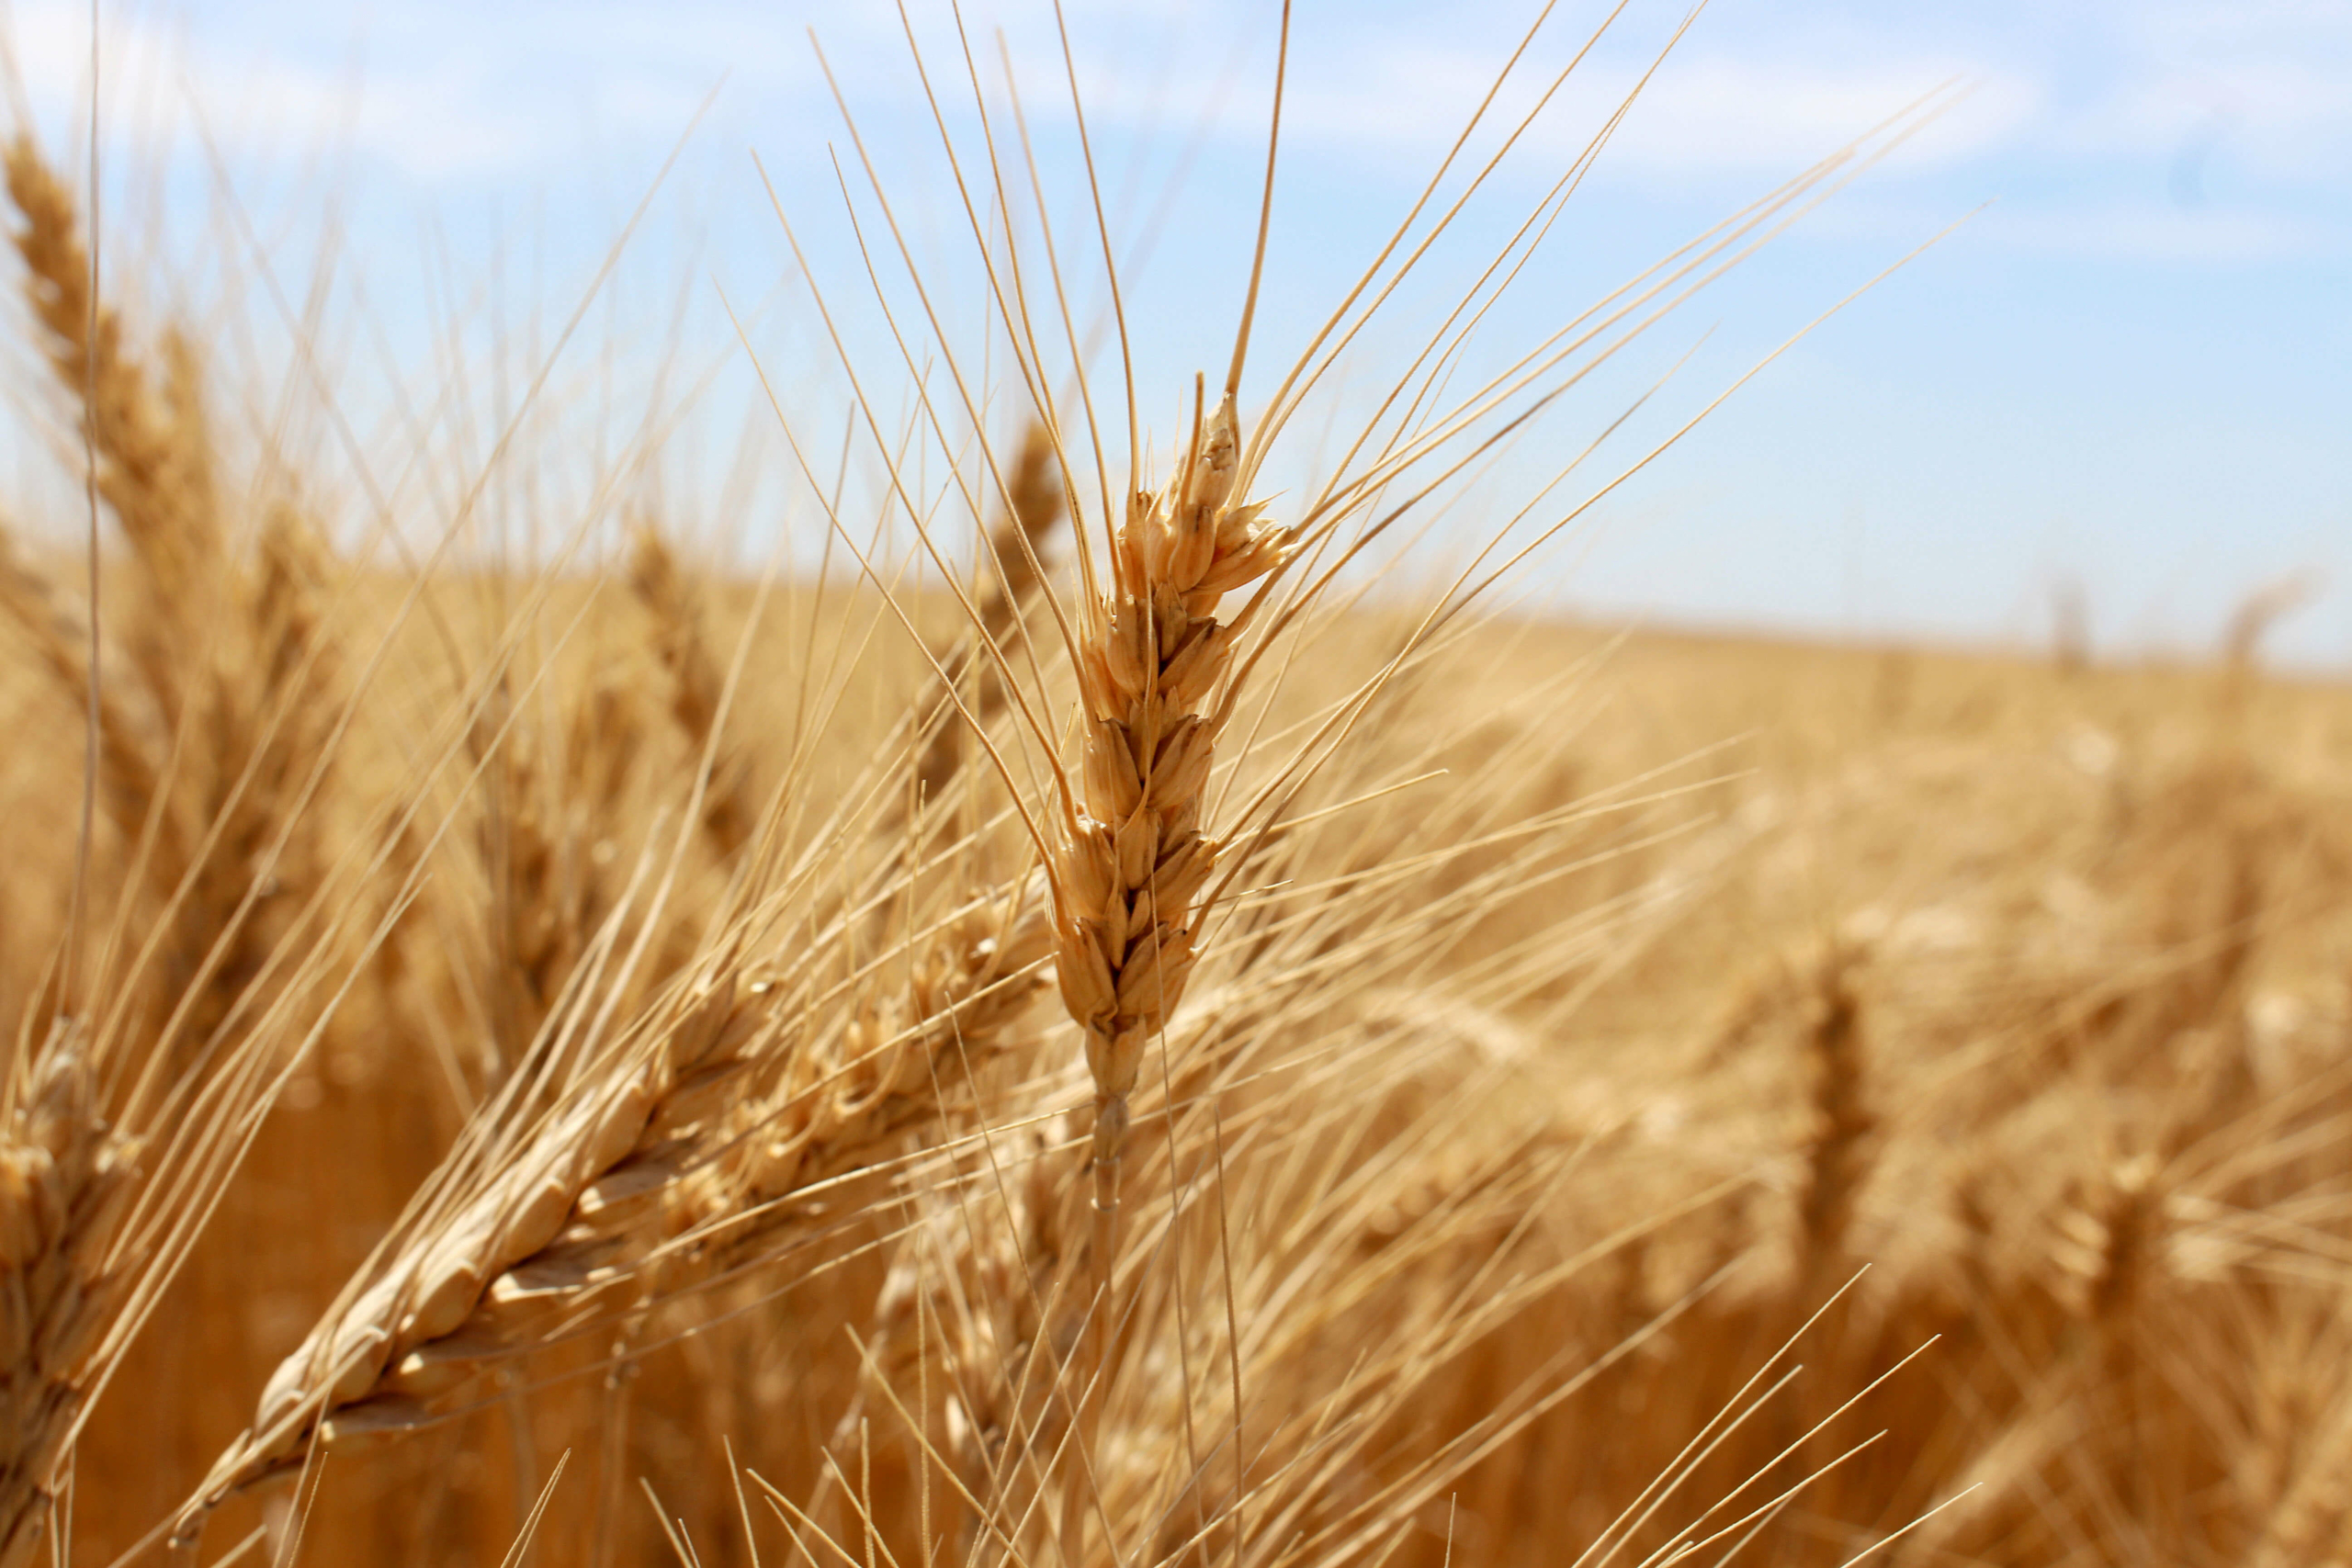 Representing U.S. Wheat Production